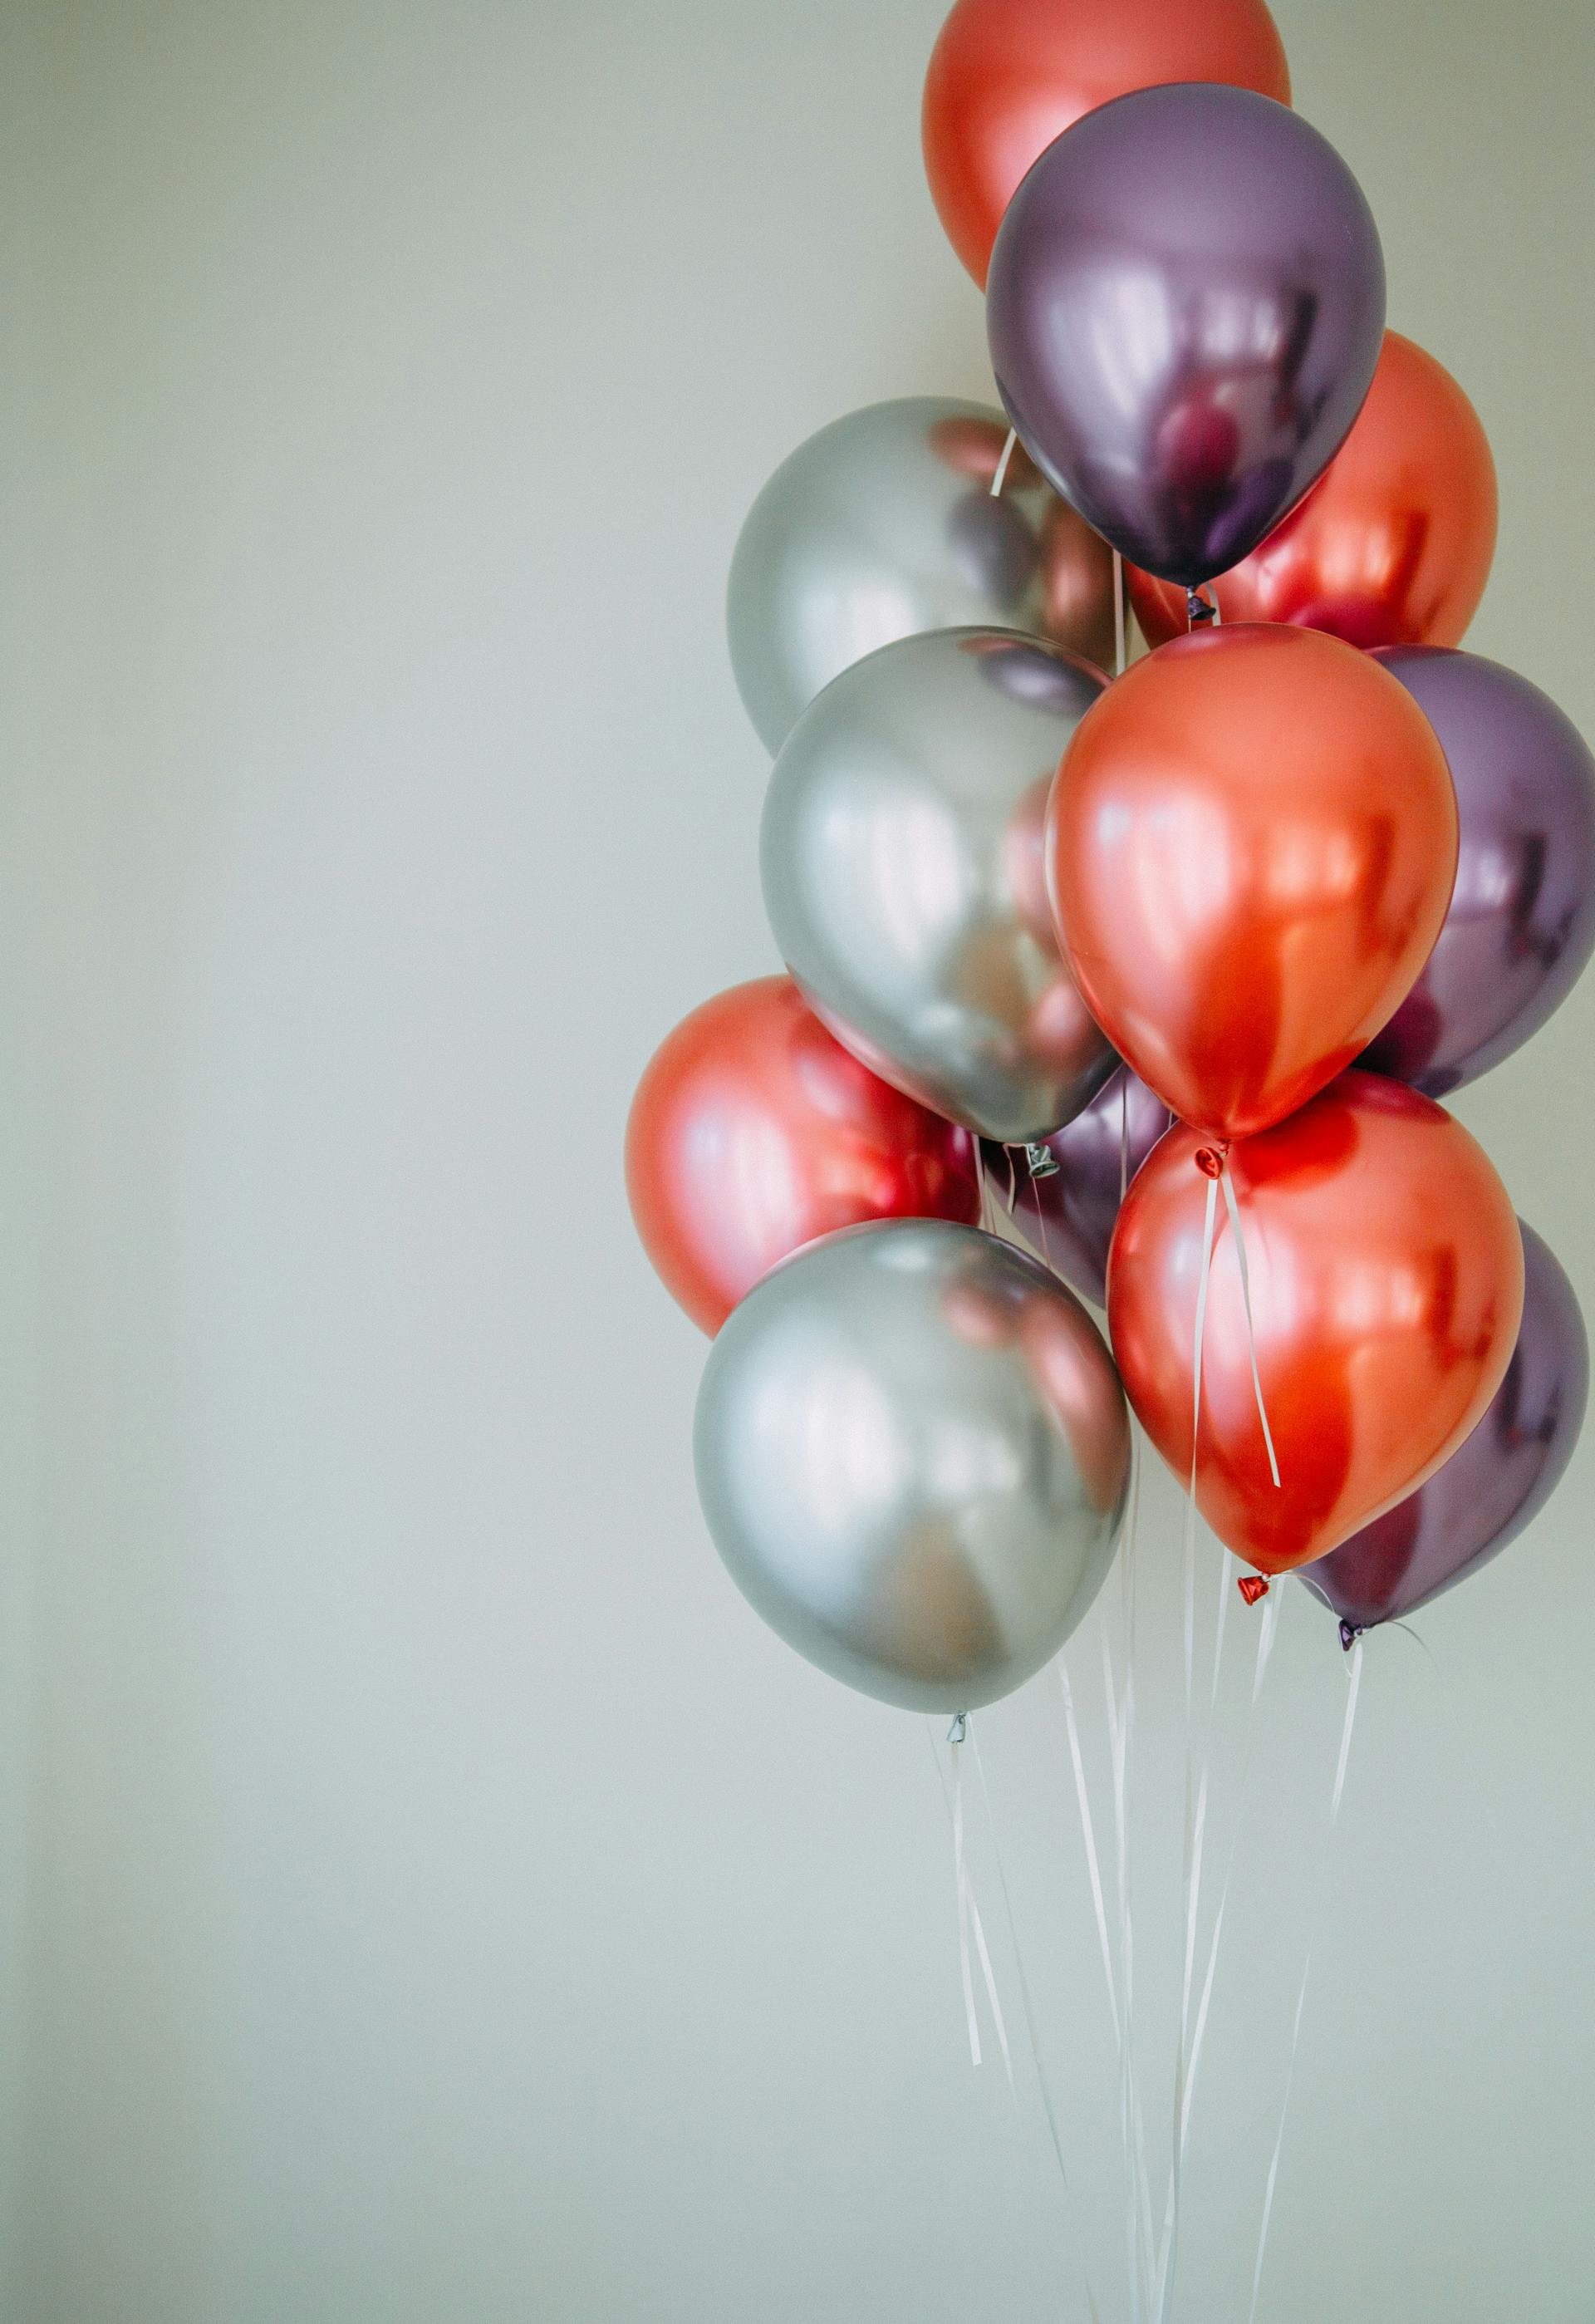 Floating shiny balloons | Source: Pexels